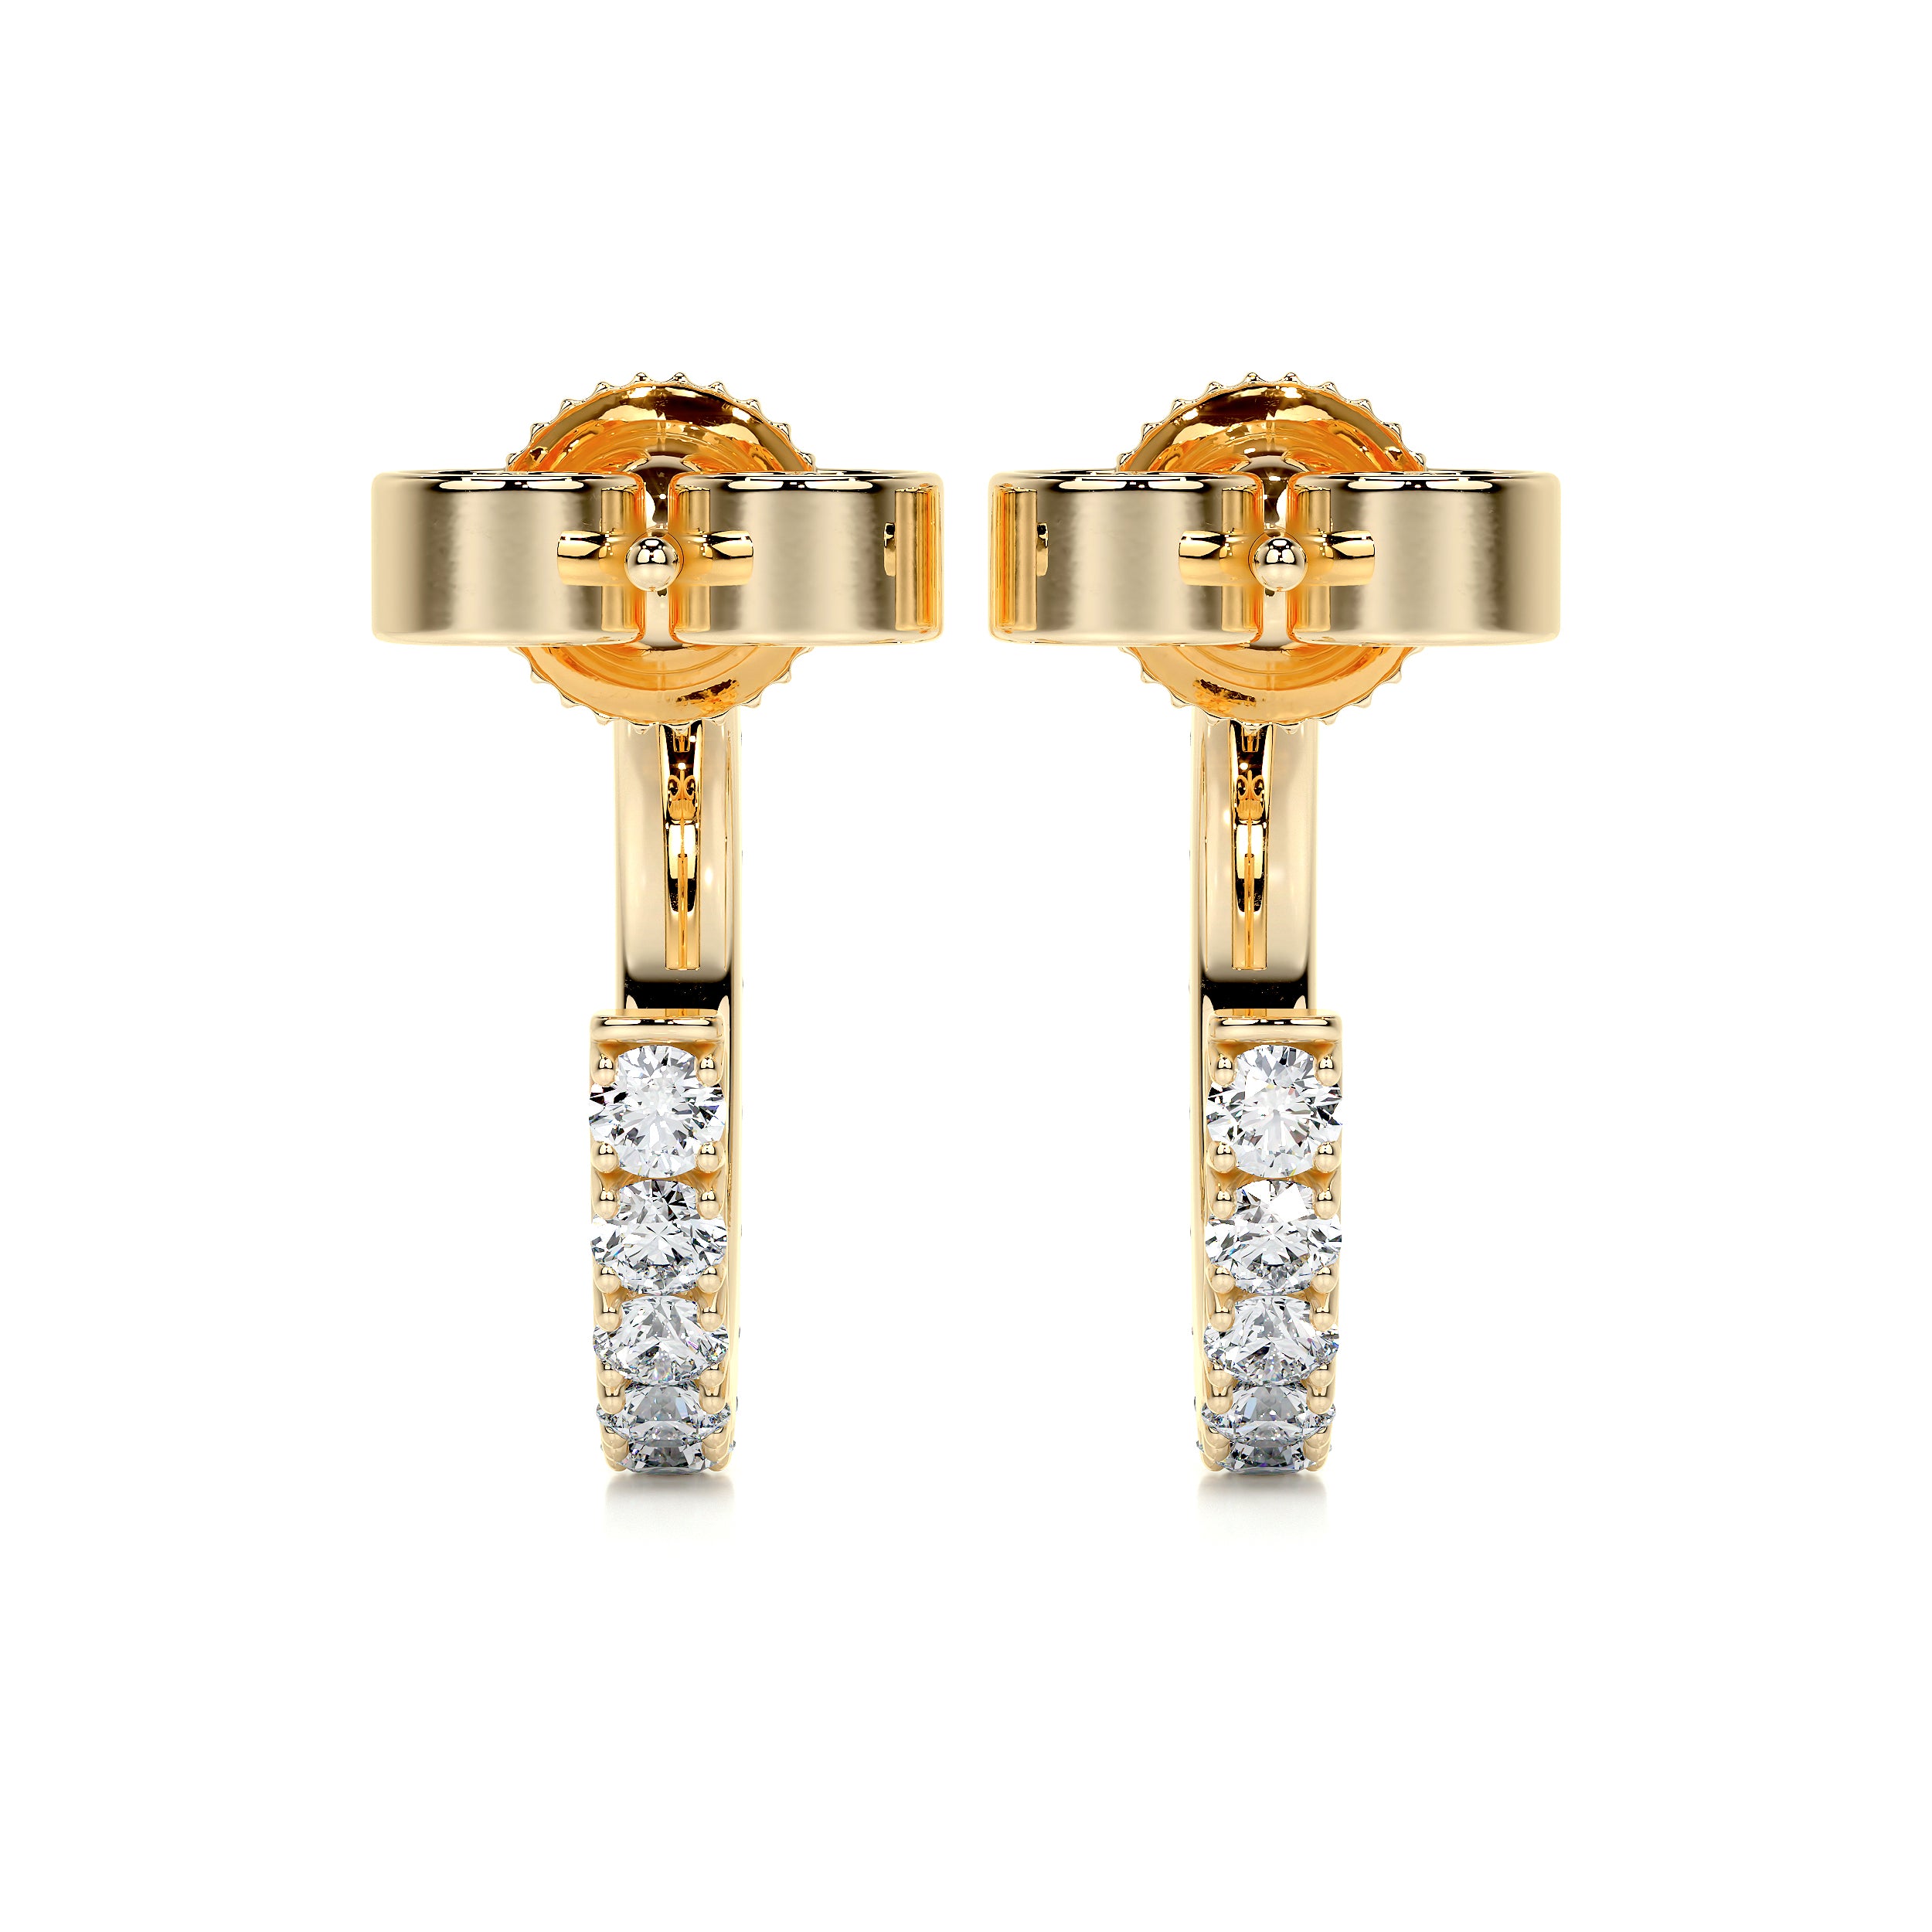 Nicole Diamond Earrings   (3 Carat) -18K Yellow Gold